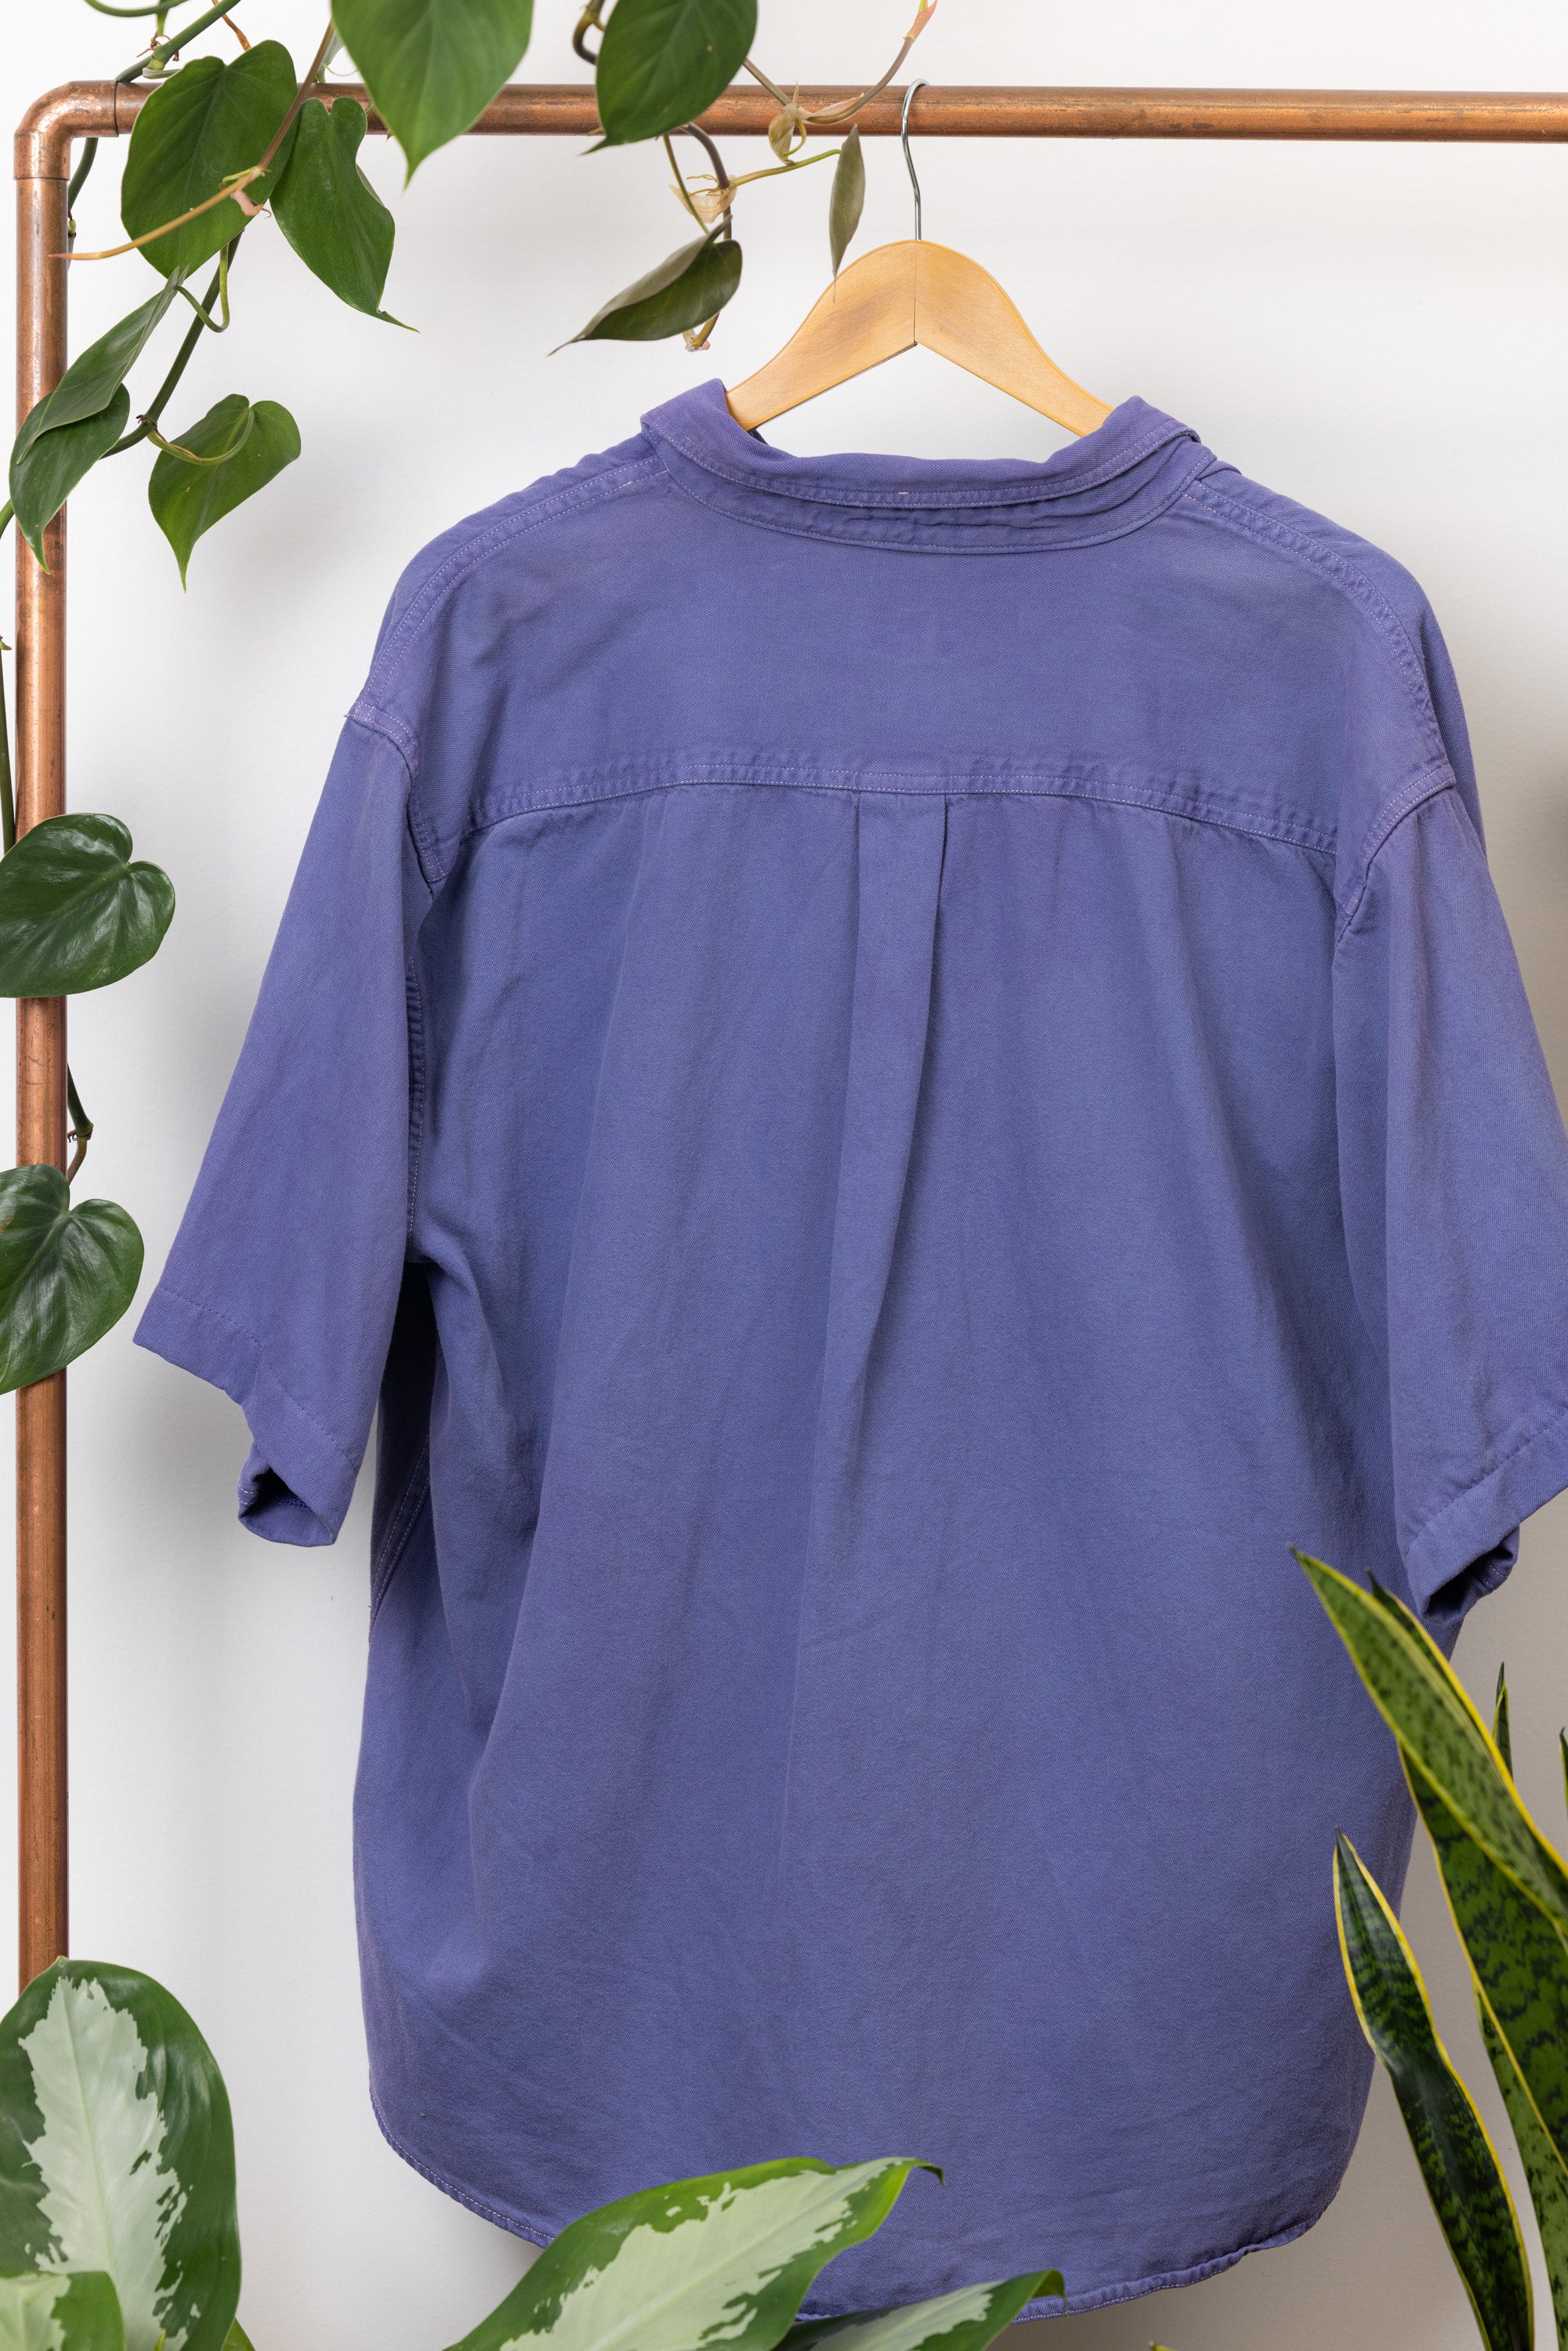 Overdye Lavender Denim Shirt 2